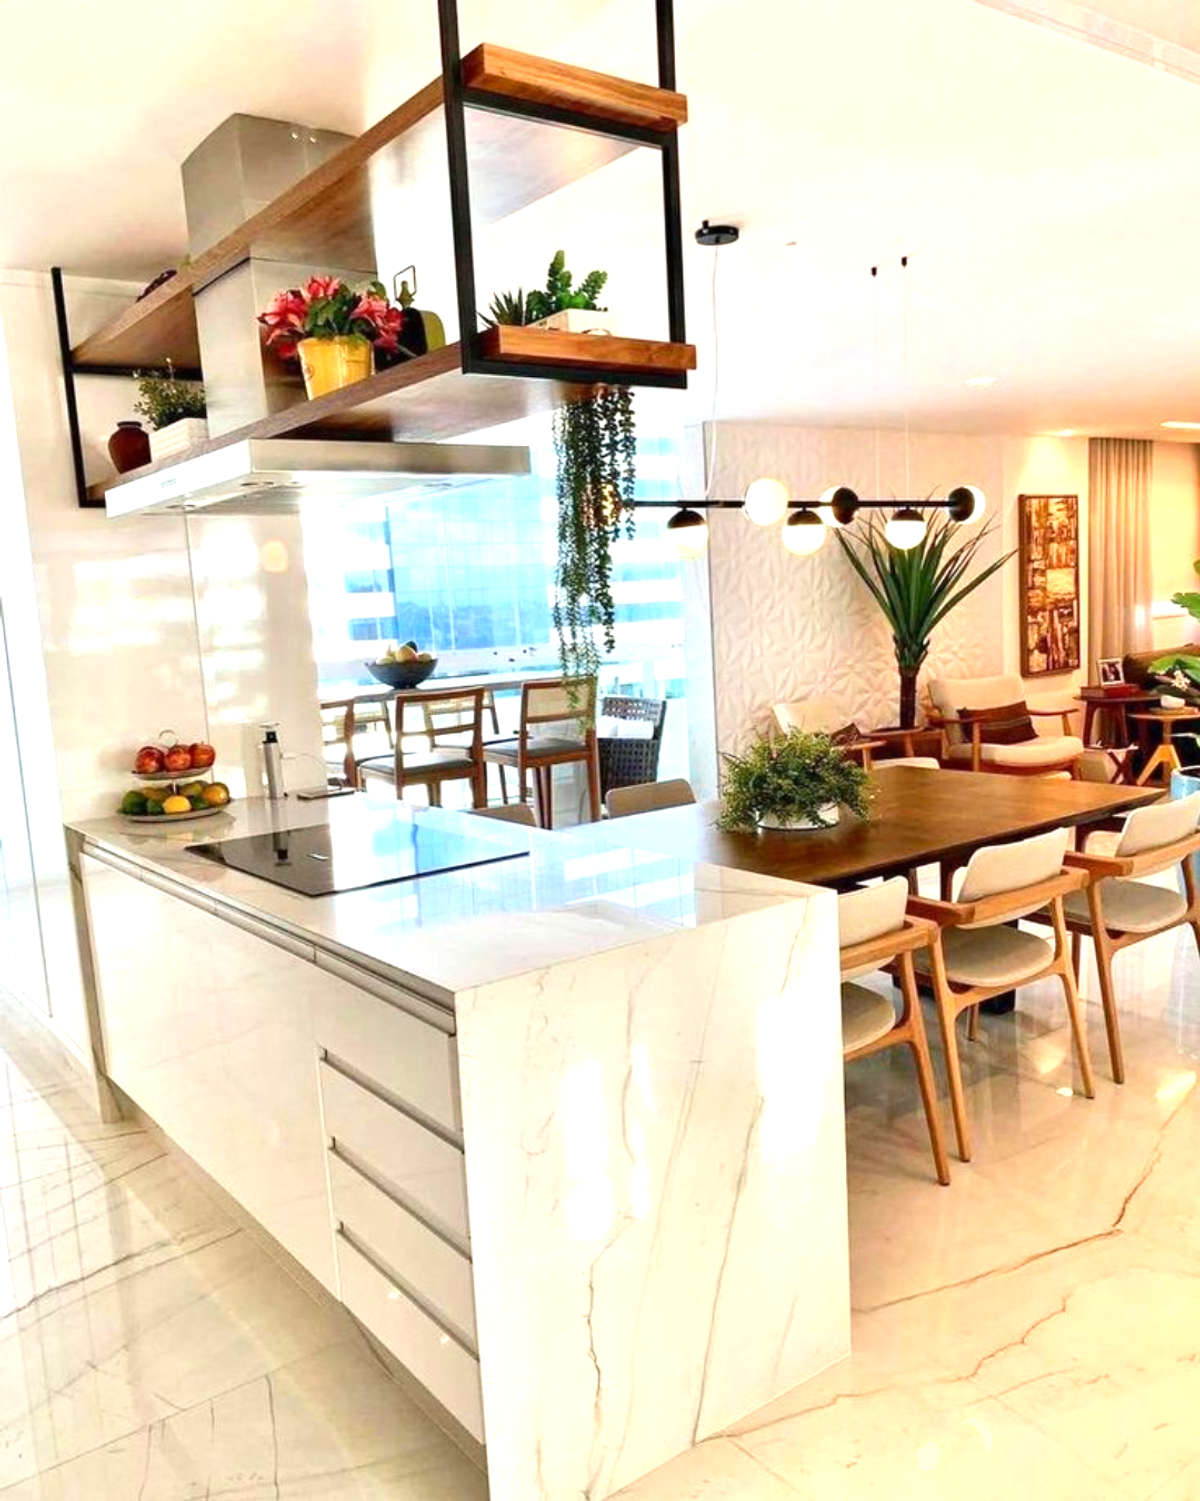 #modular kitchen
#bedroom interior
#LivingroomDesigns
#LivingRoomTV
#hallspace